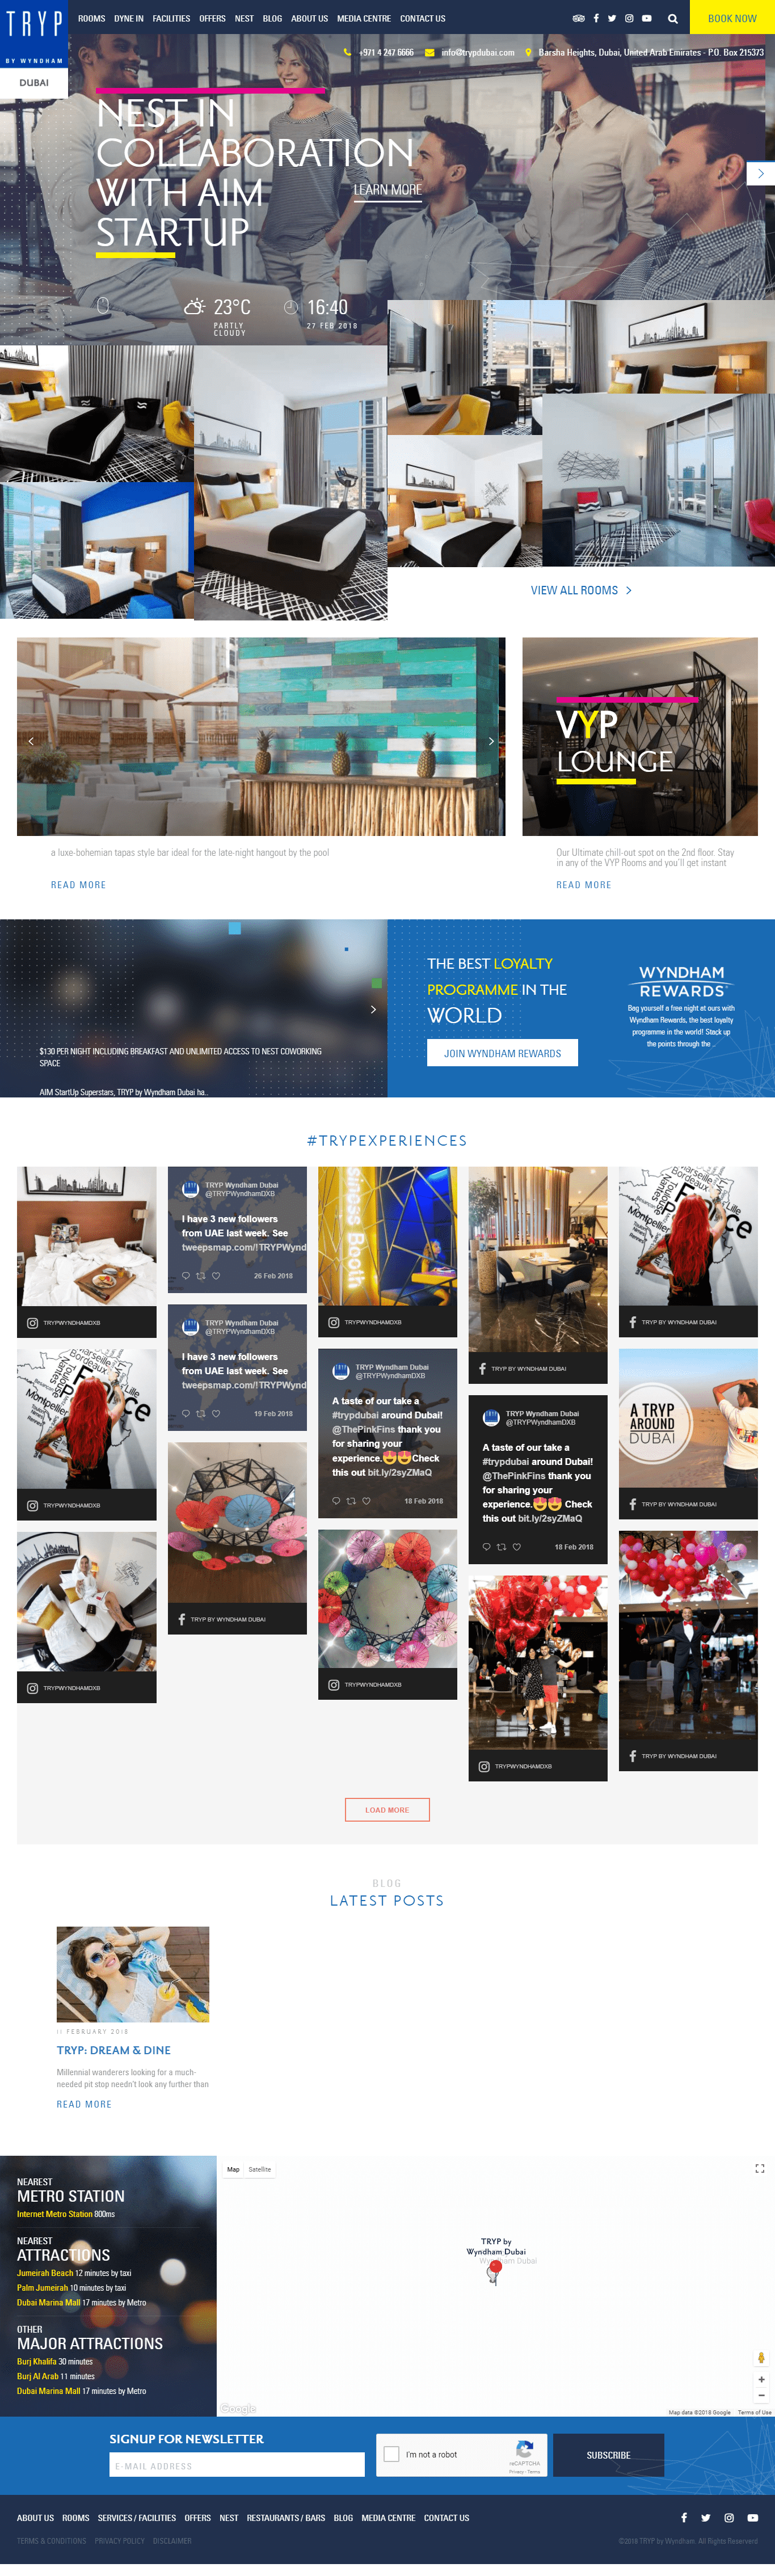 TRYP Wyndham Website by Nexa, Dubai